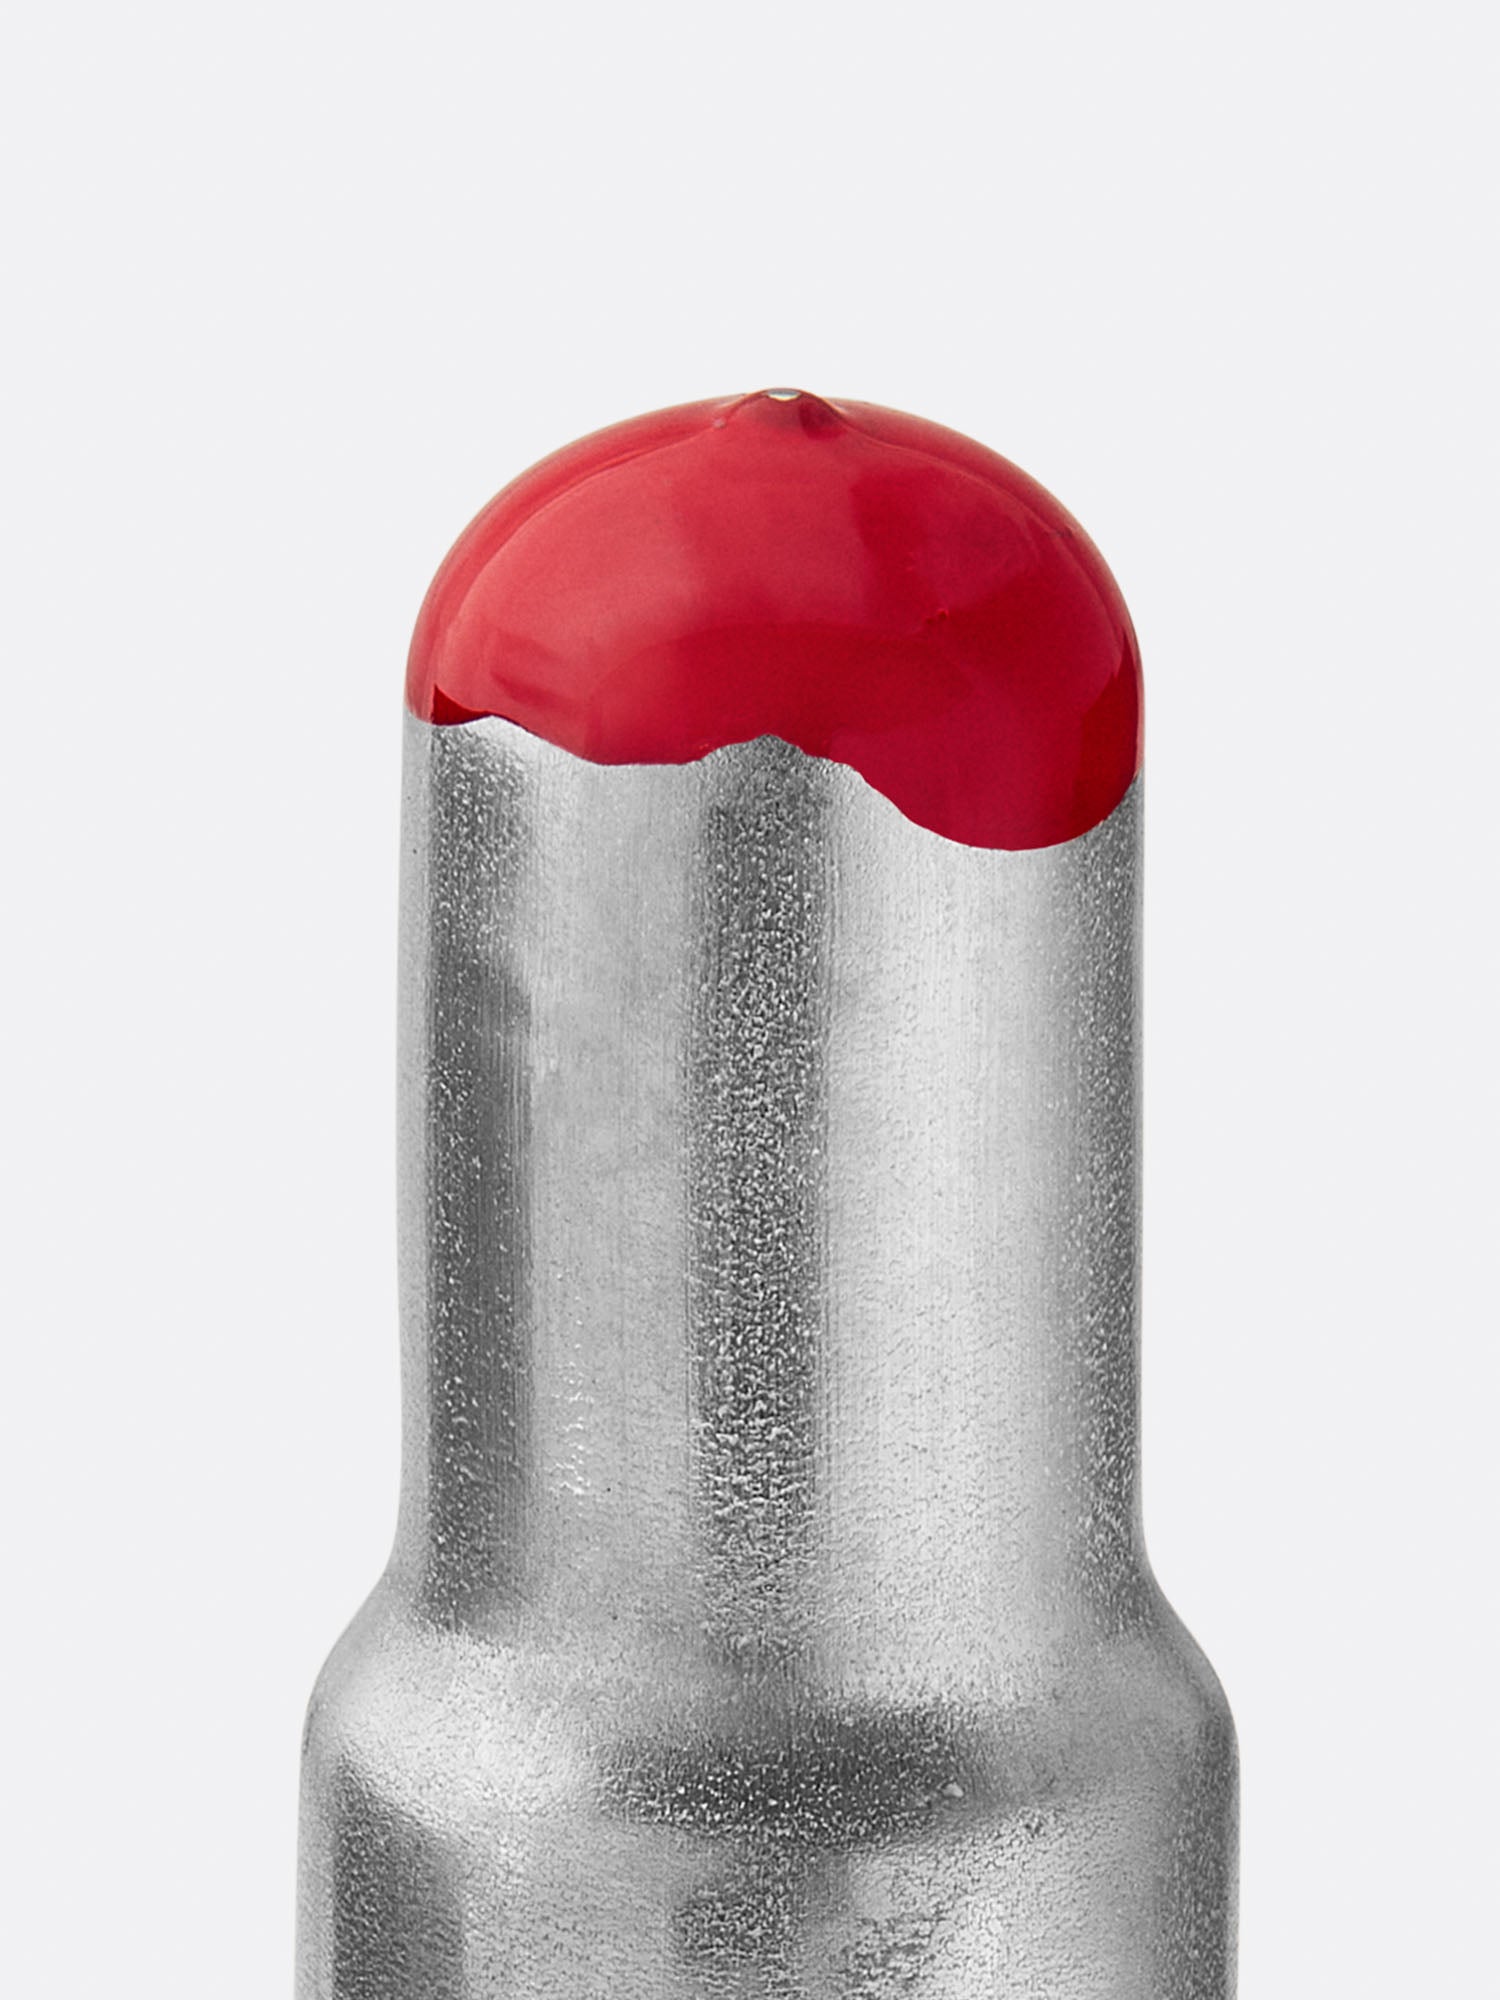 Krink K-66 Squeeze Metal Tip Paint Marker (10 Color Options) Reviews 2024